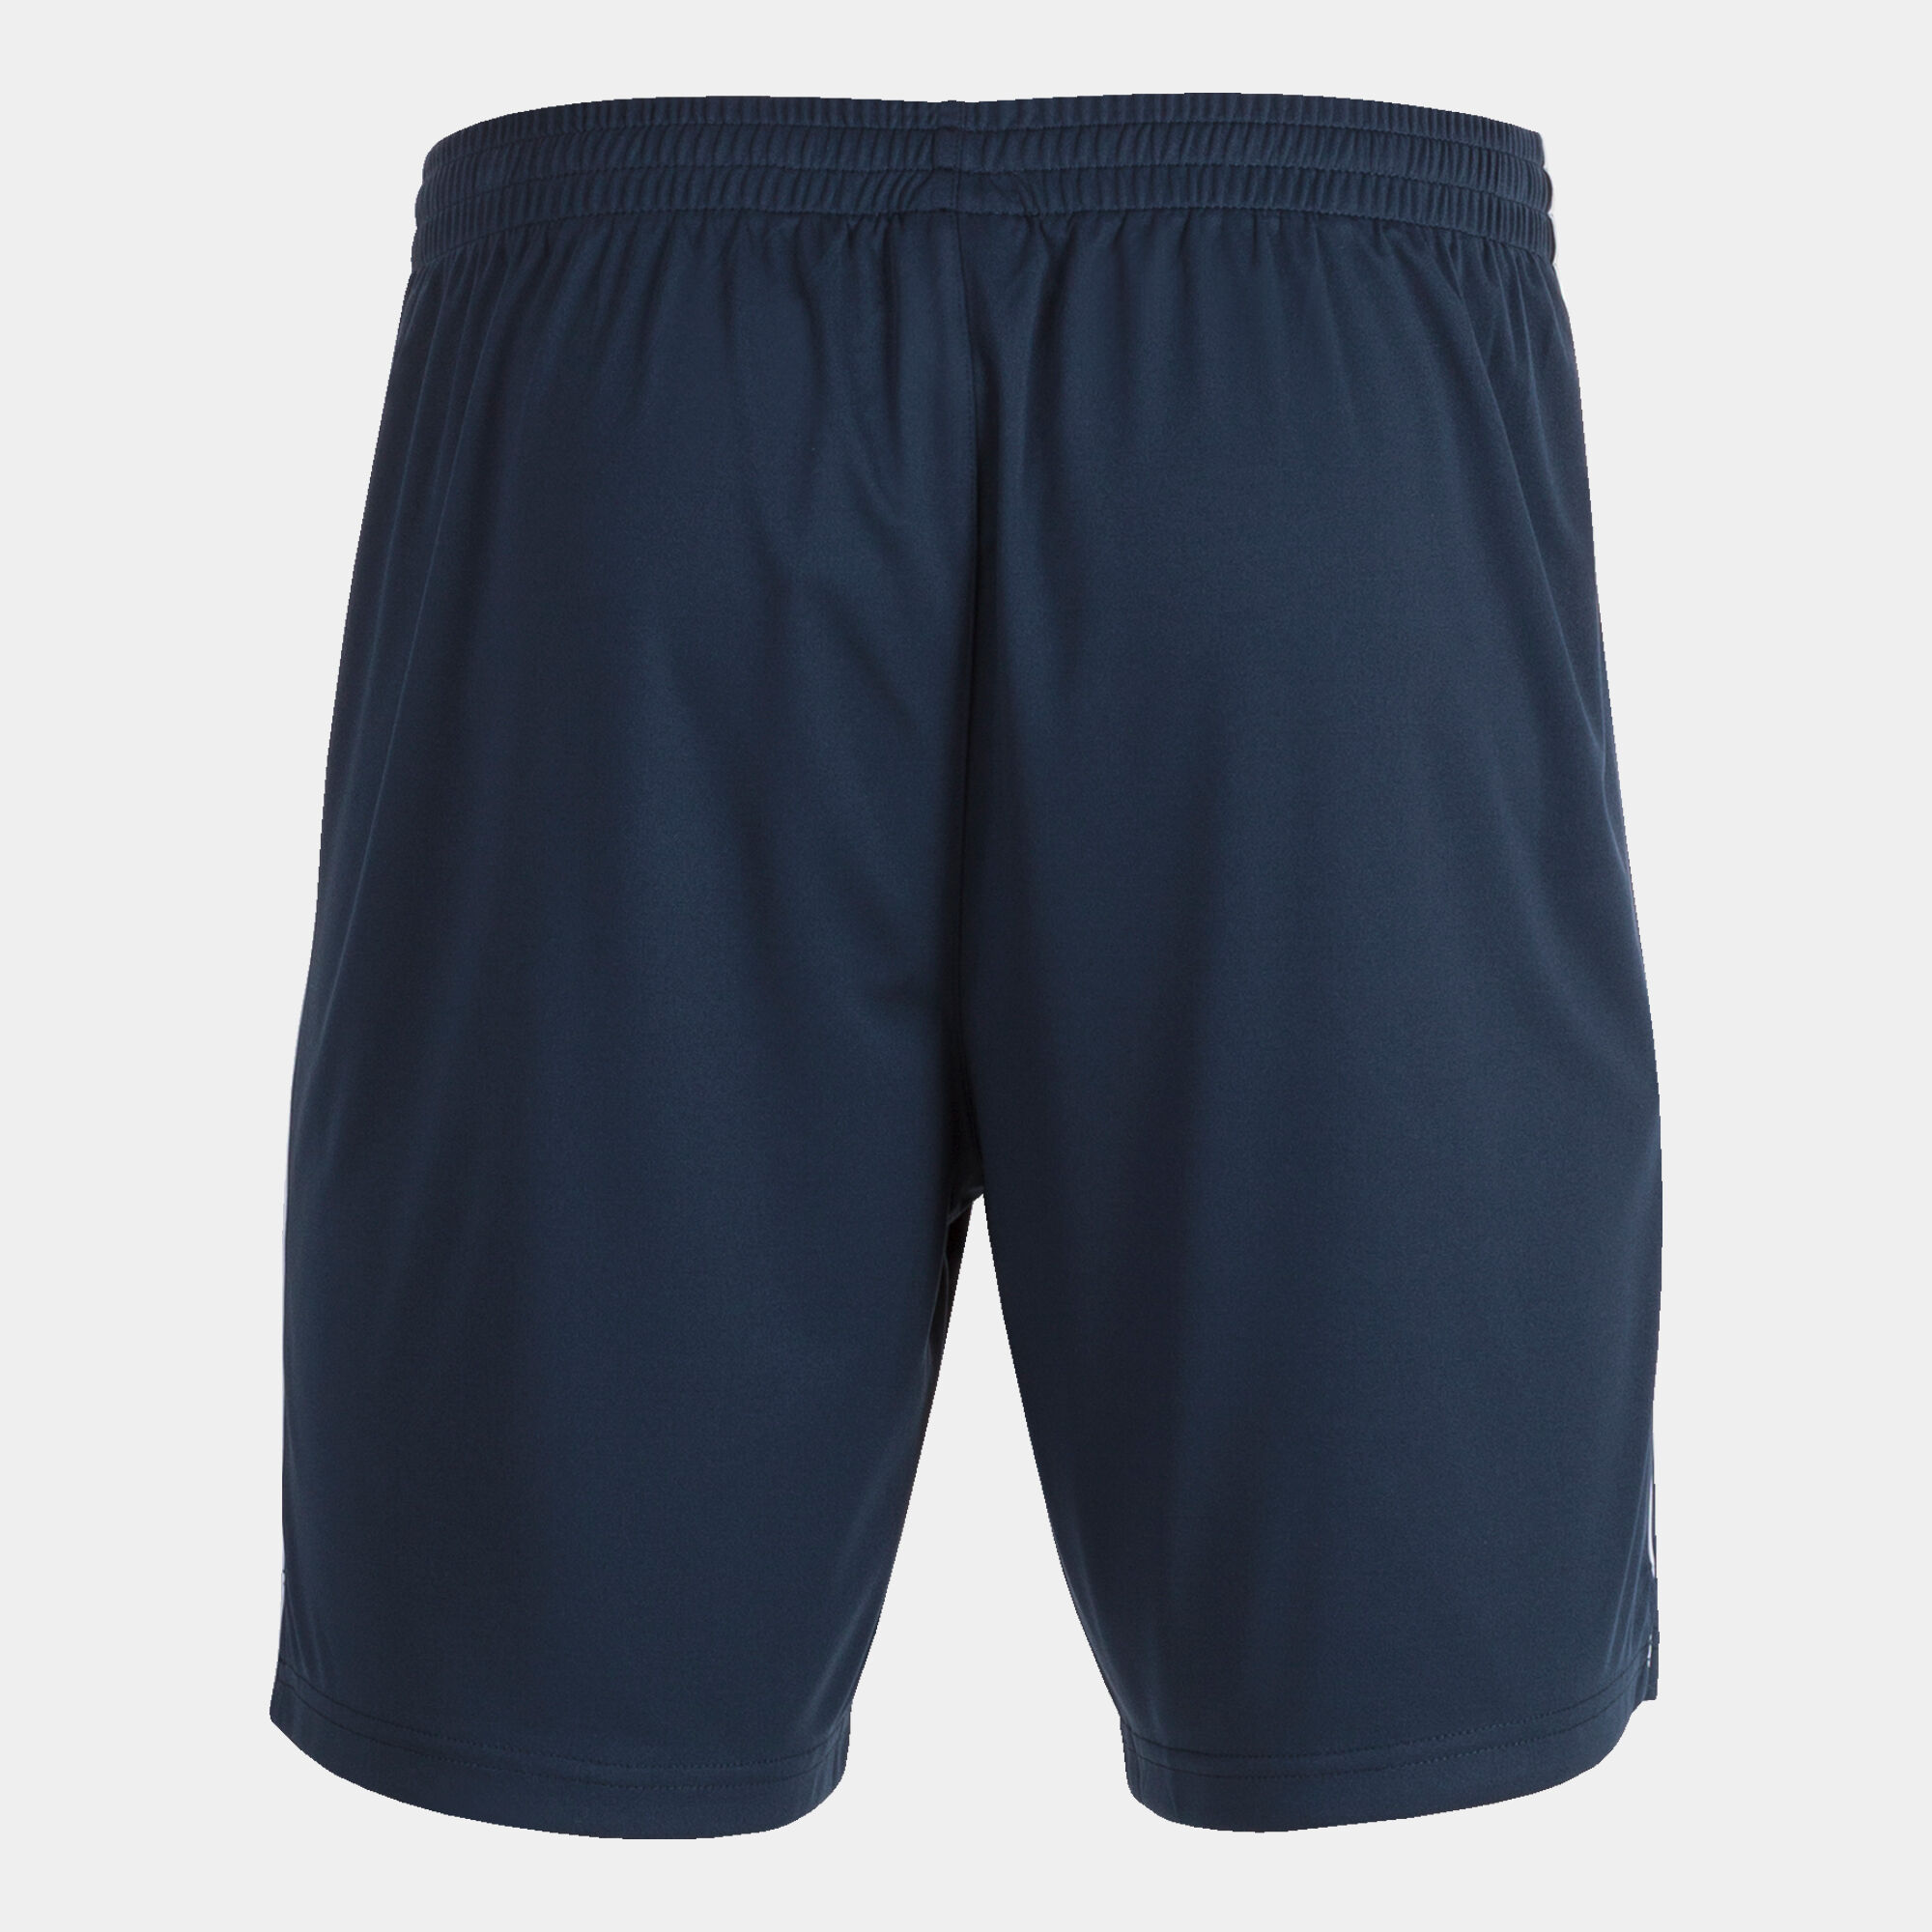 Bermuda shorts man Open III navy blue white